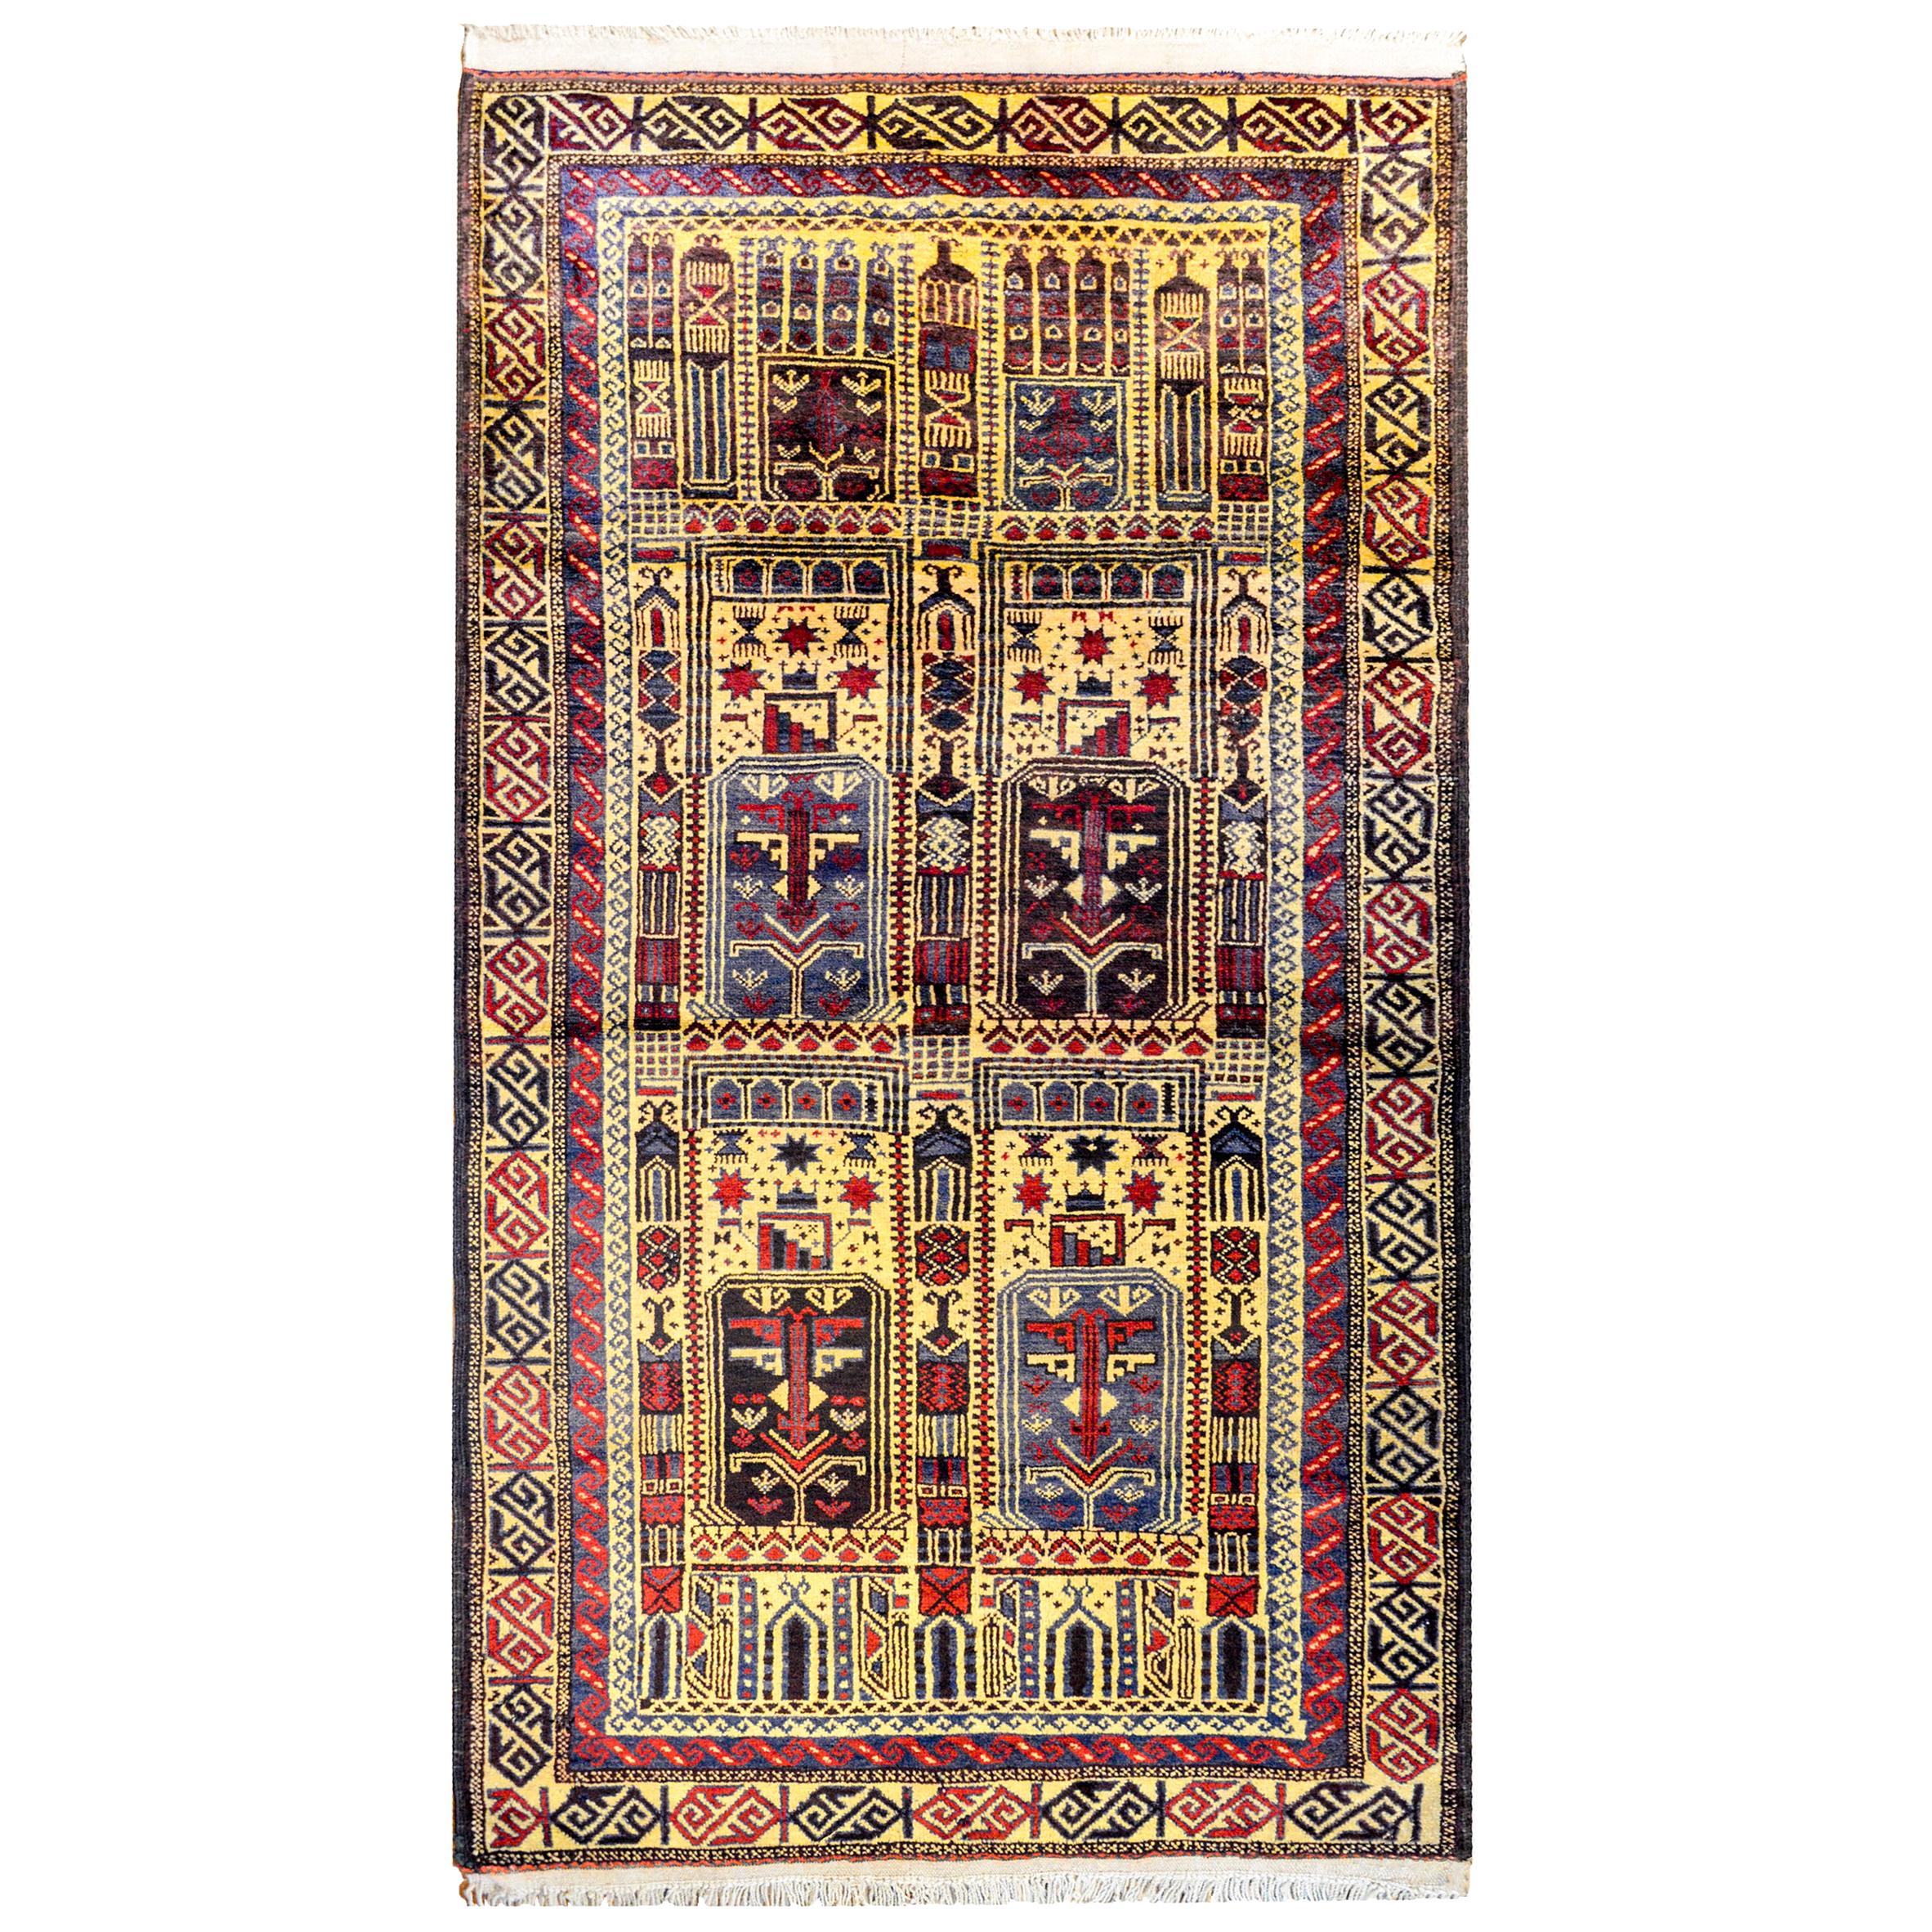 Baluchi Rugs - 10 For Sale on 1stDibs | baluchi carpets, belouch 